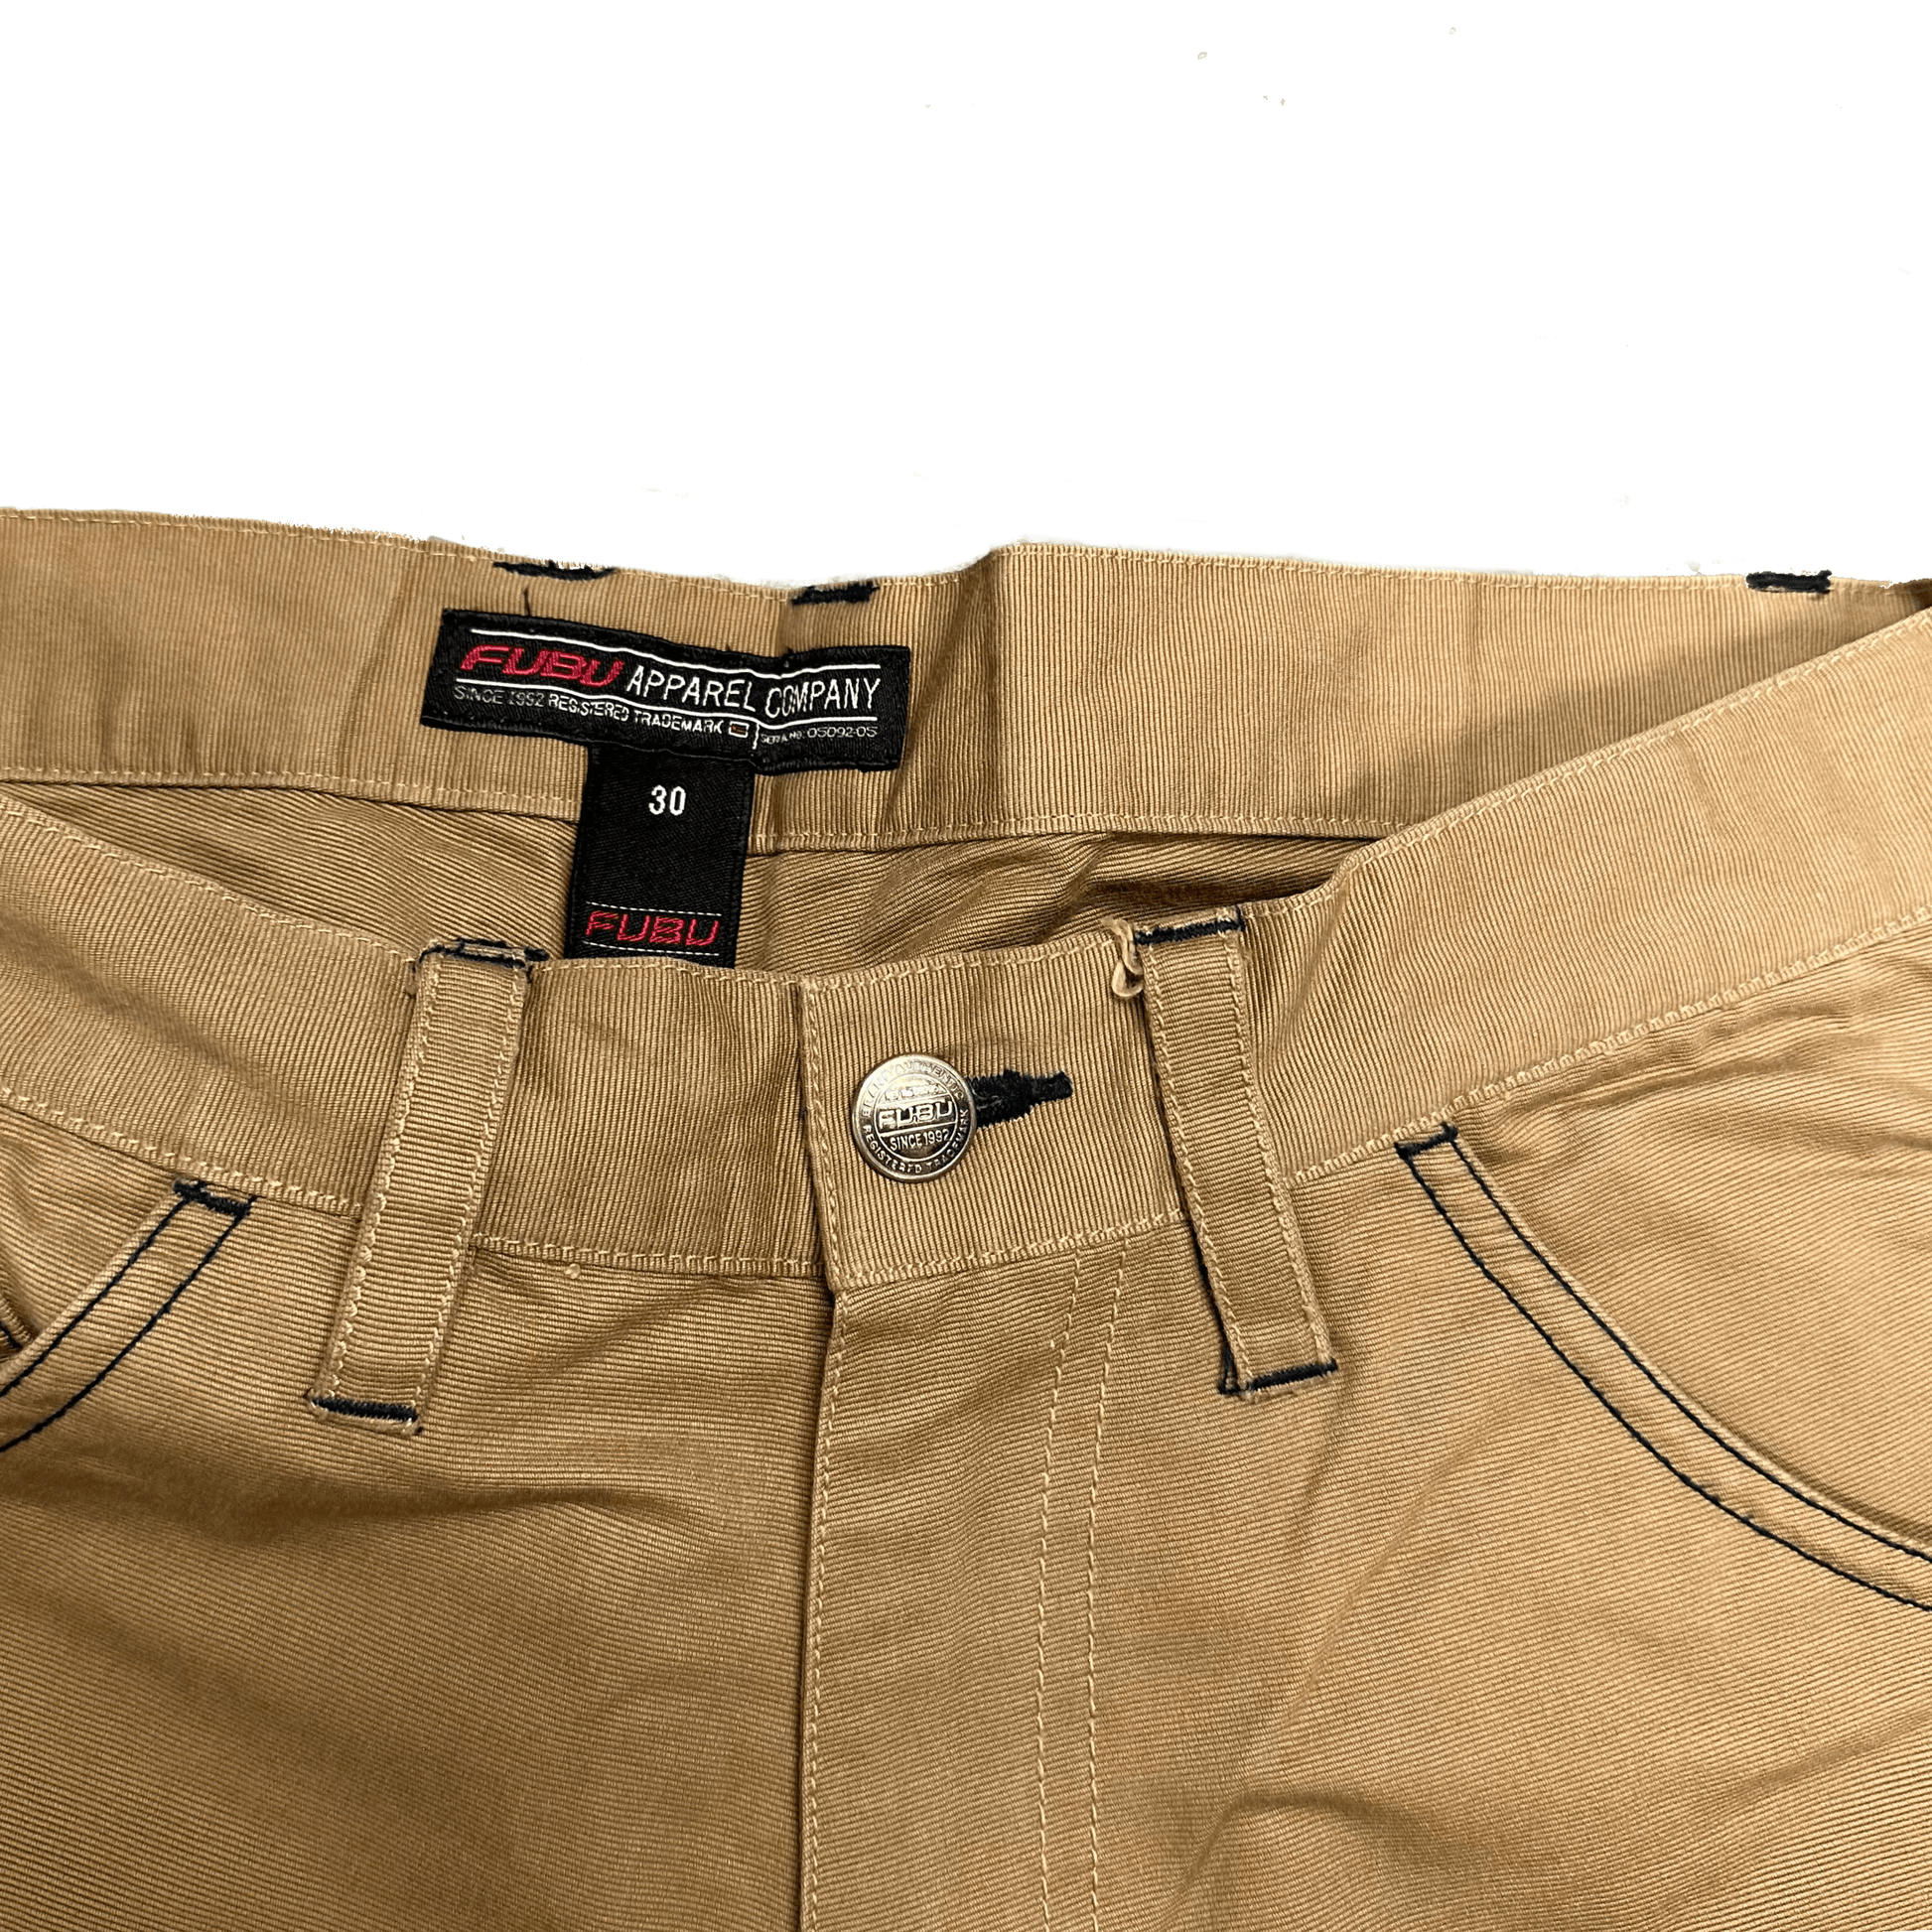 Fubu Shorts In Beige ( W30 ) - Known Source